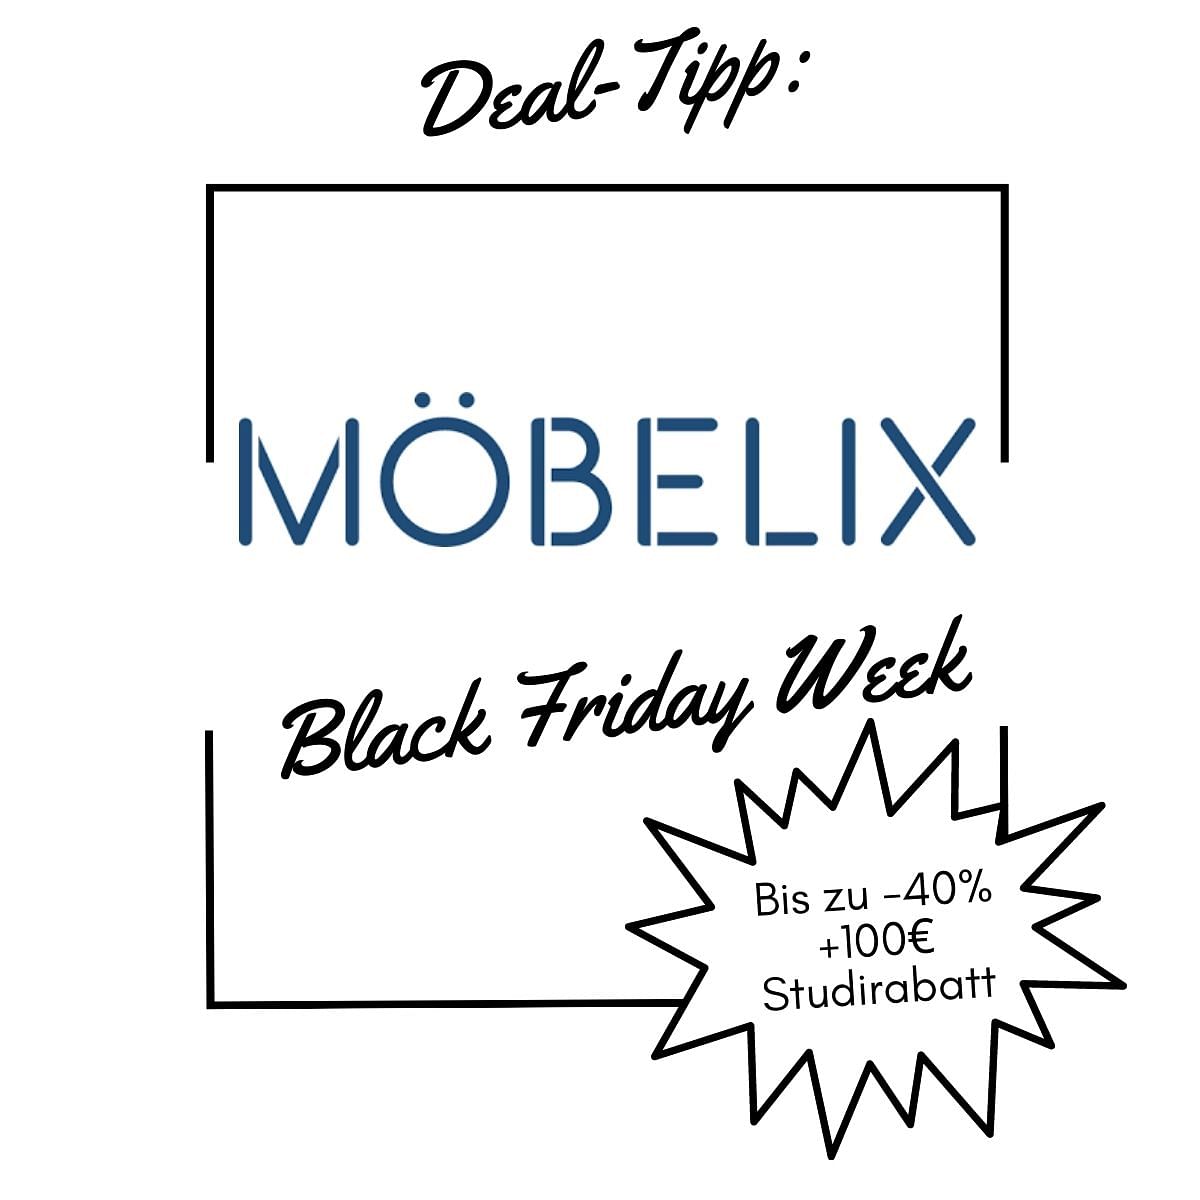 -40% bei Möbelix Black Friday Deals + bis zu 100€ Studi-Rabatt extra!